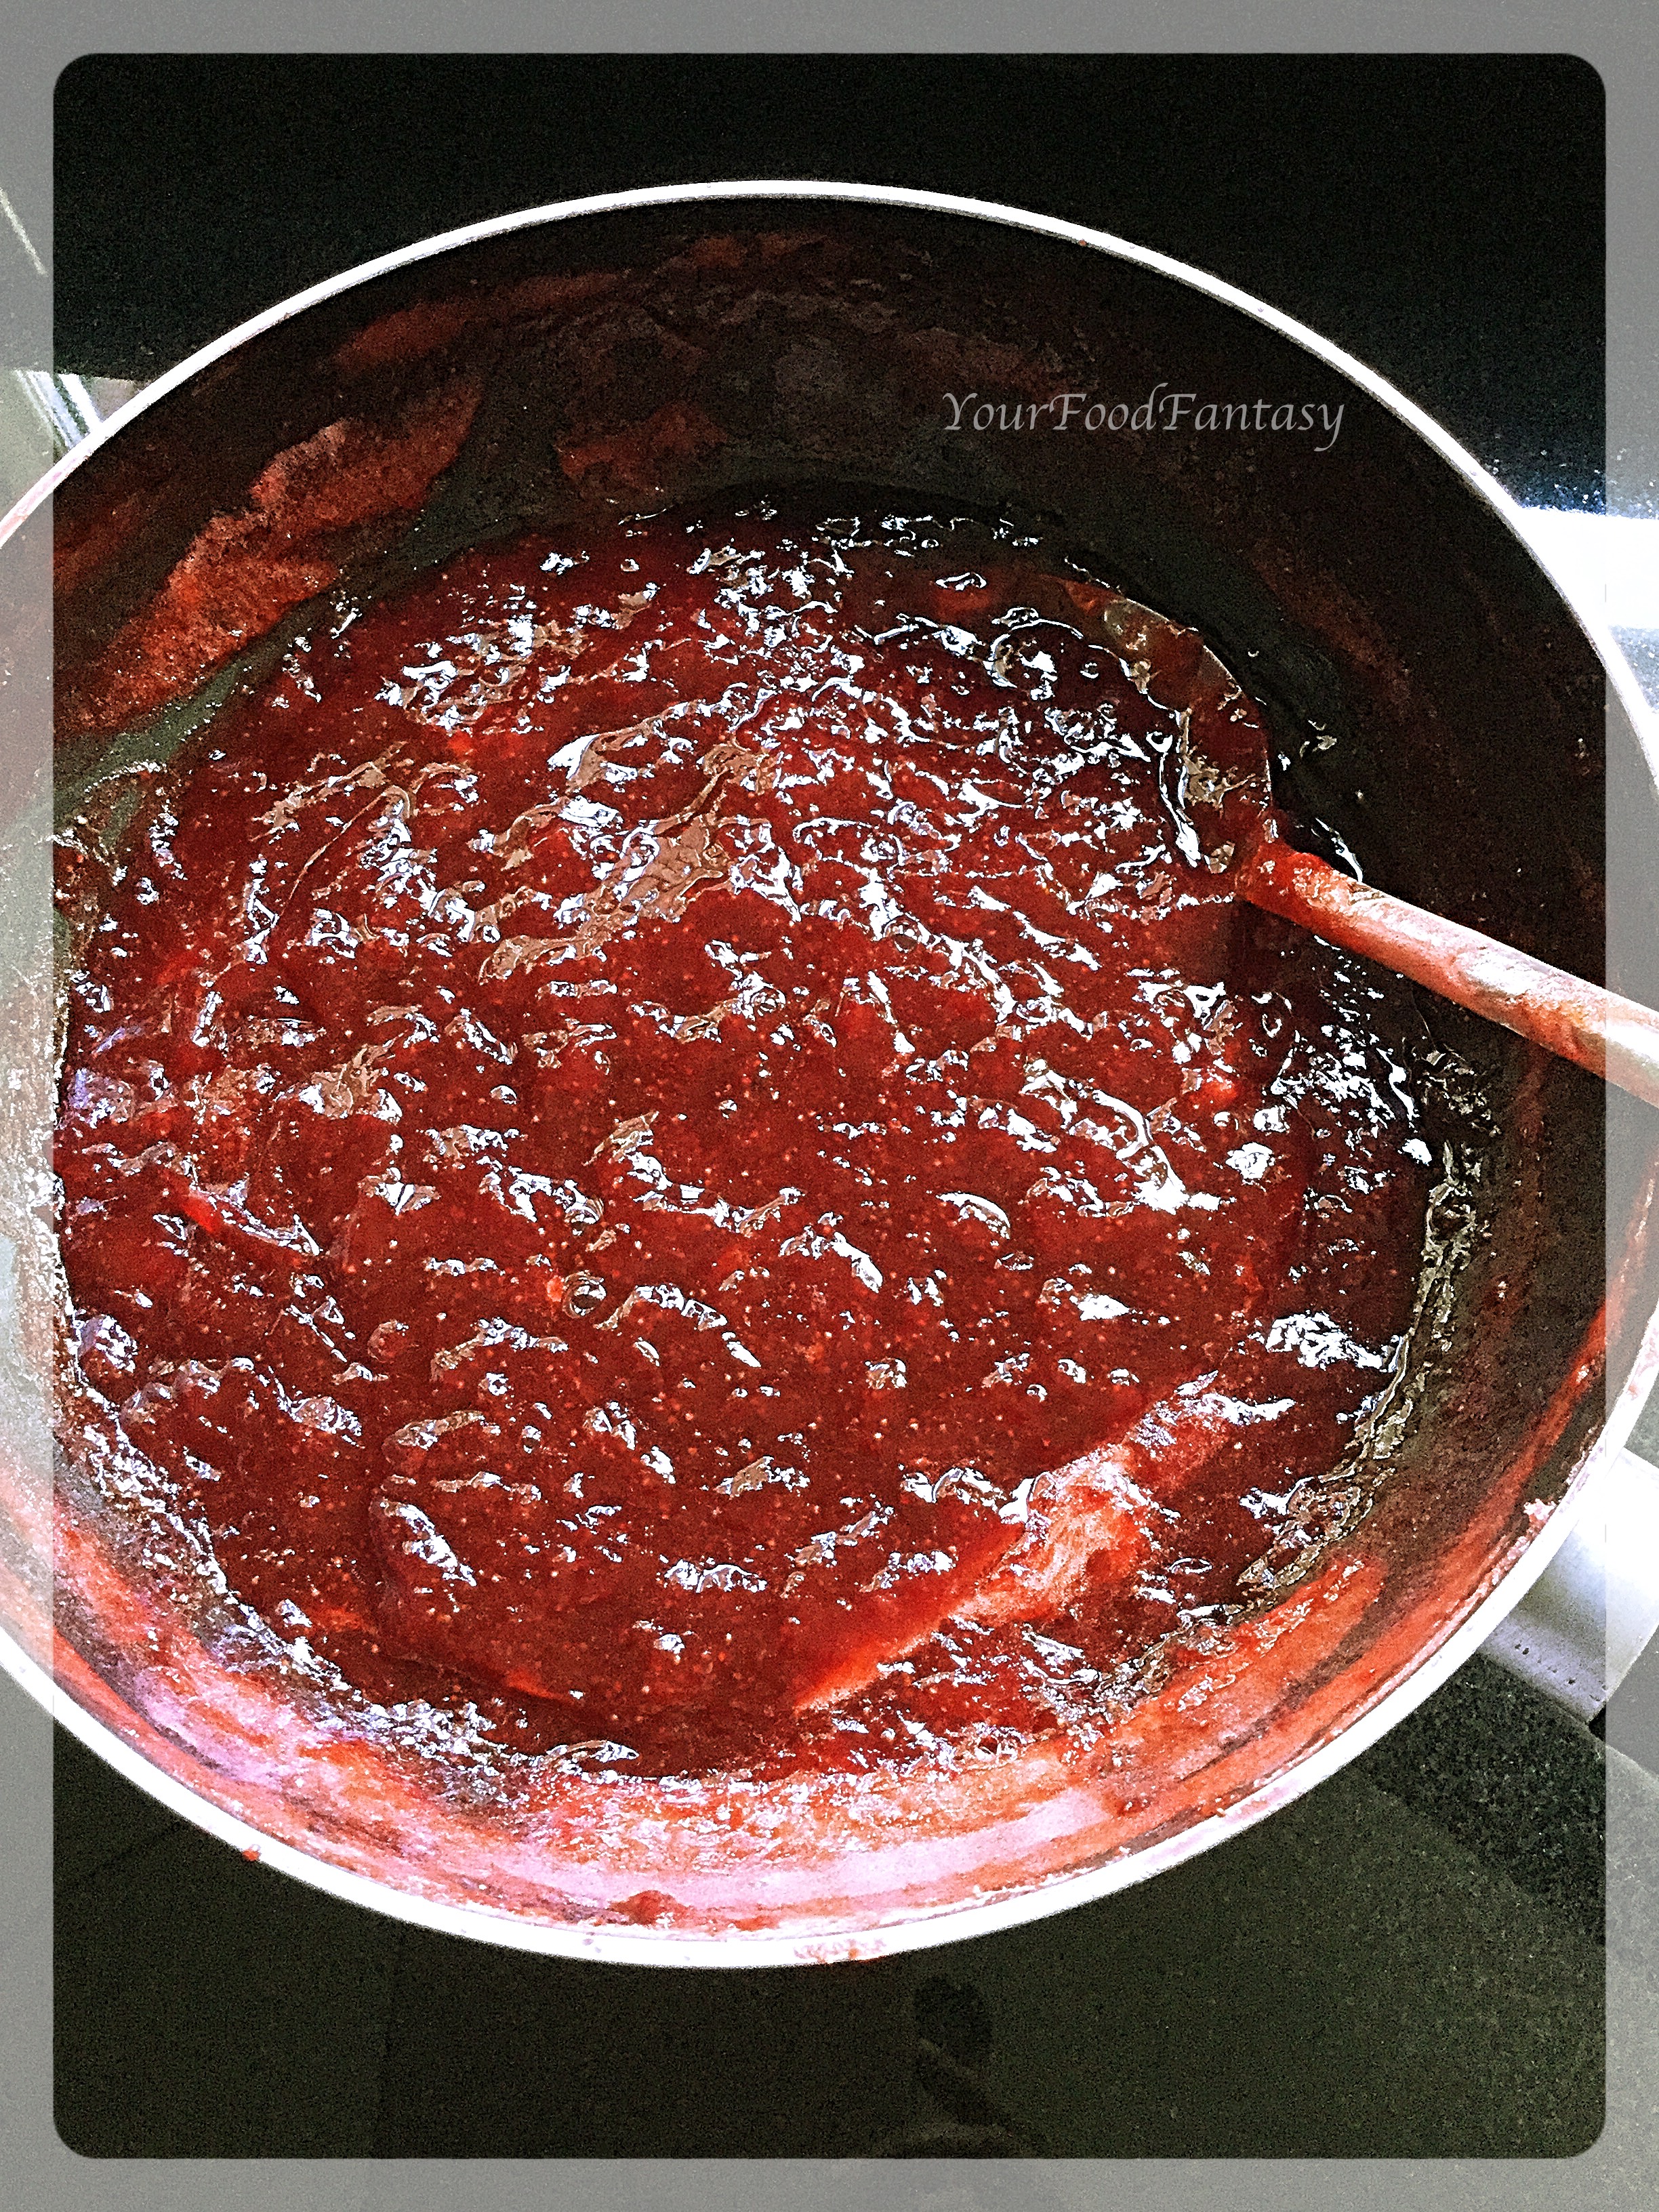 Making of Strawberry Jam | YourFoodFantasy by Meenu Gupta